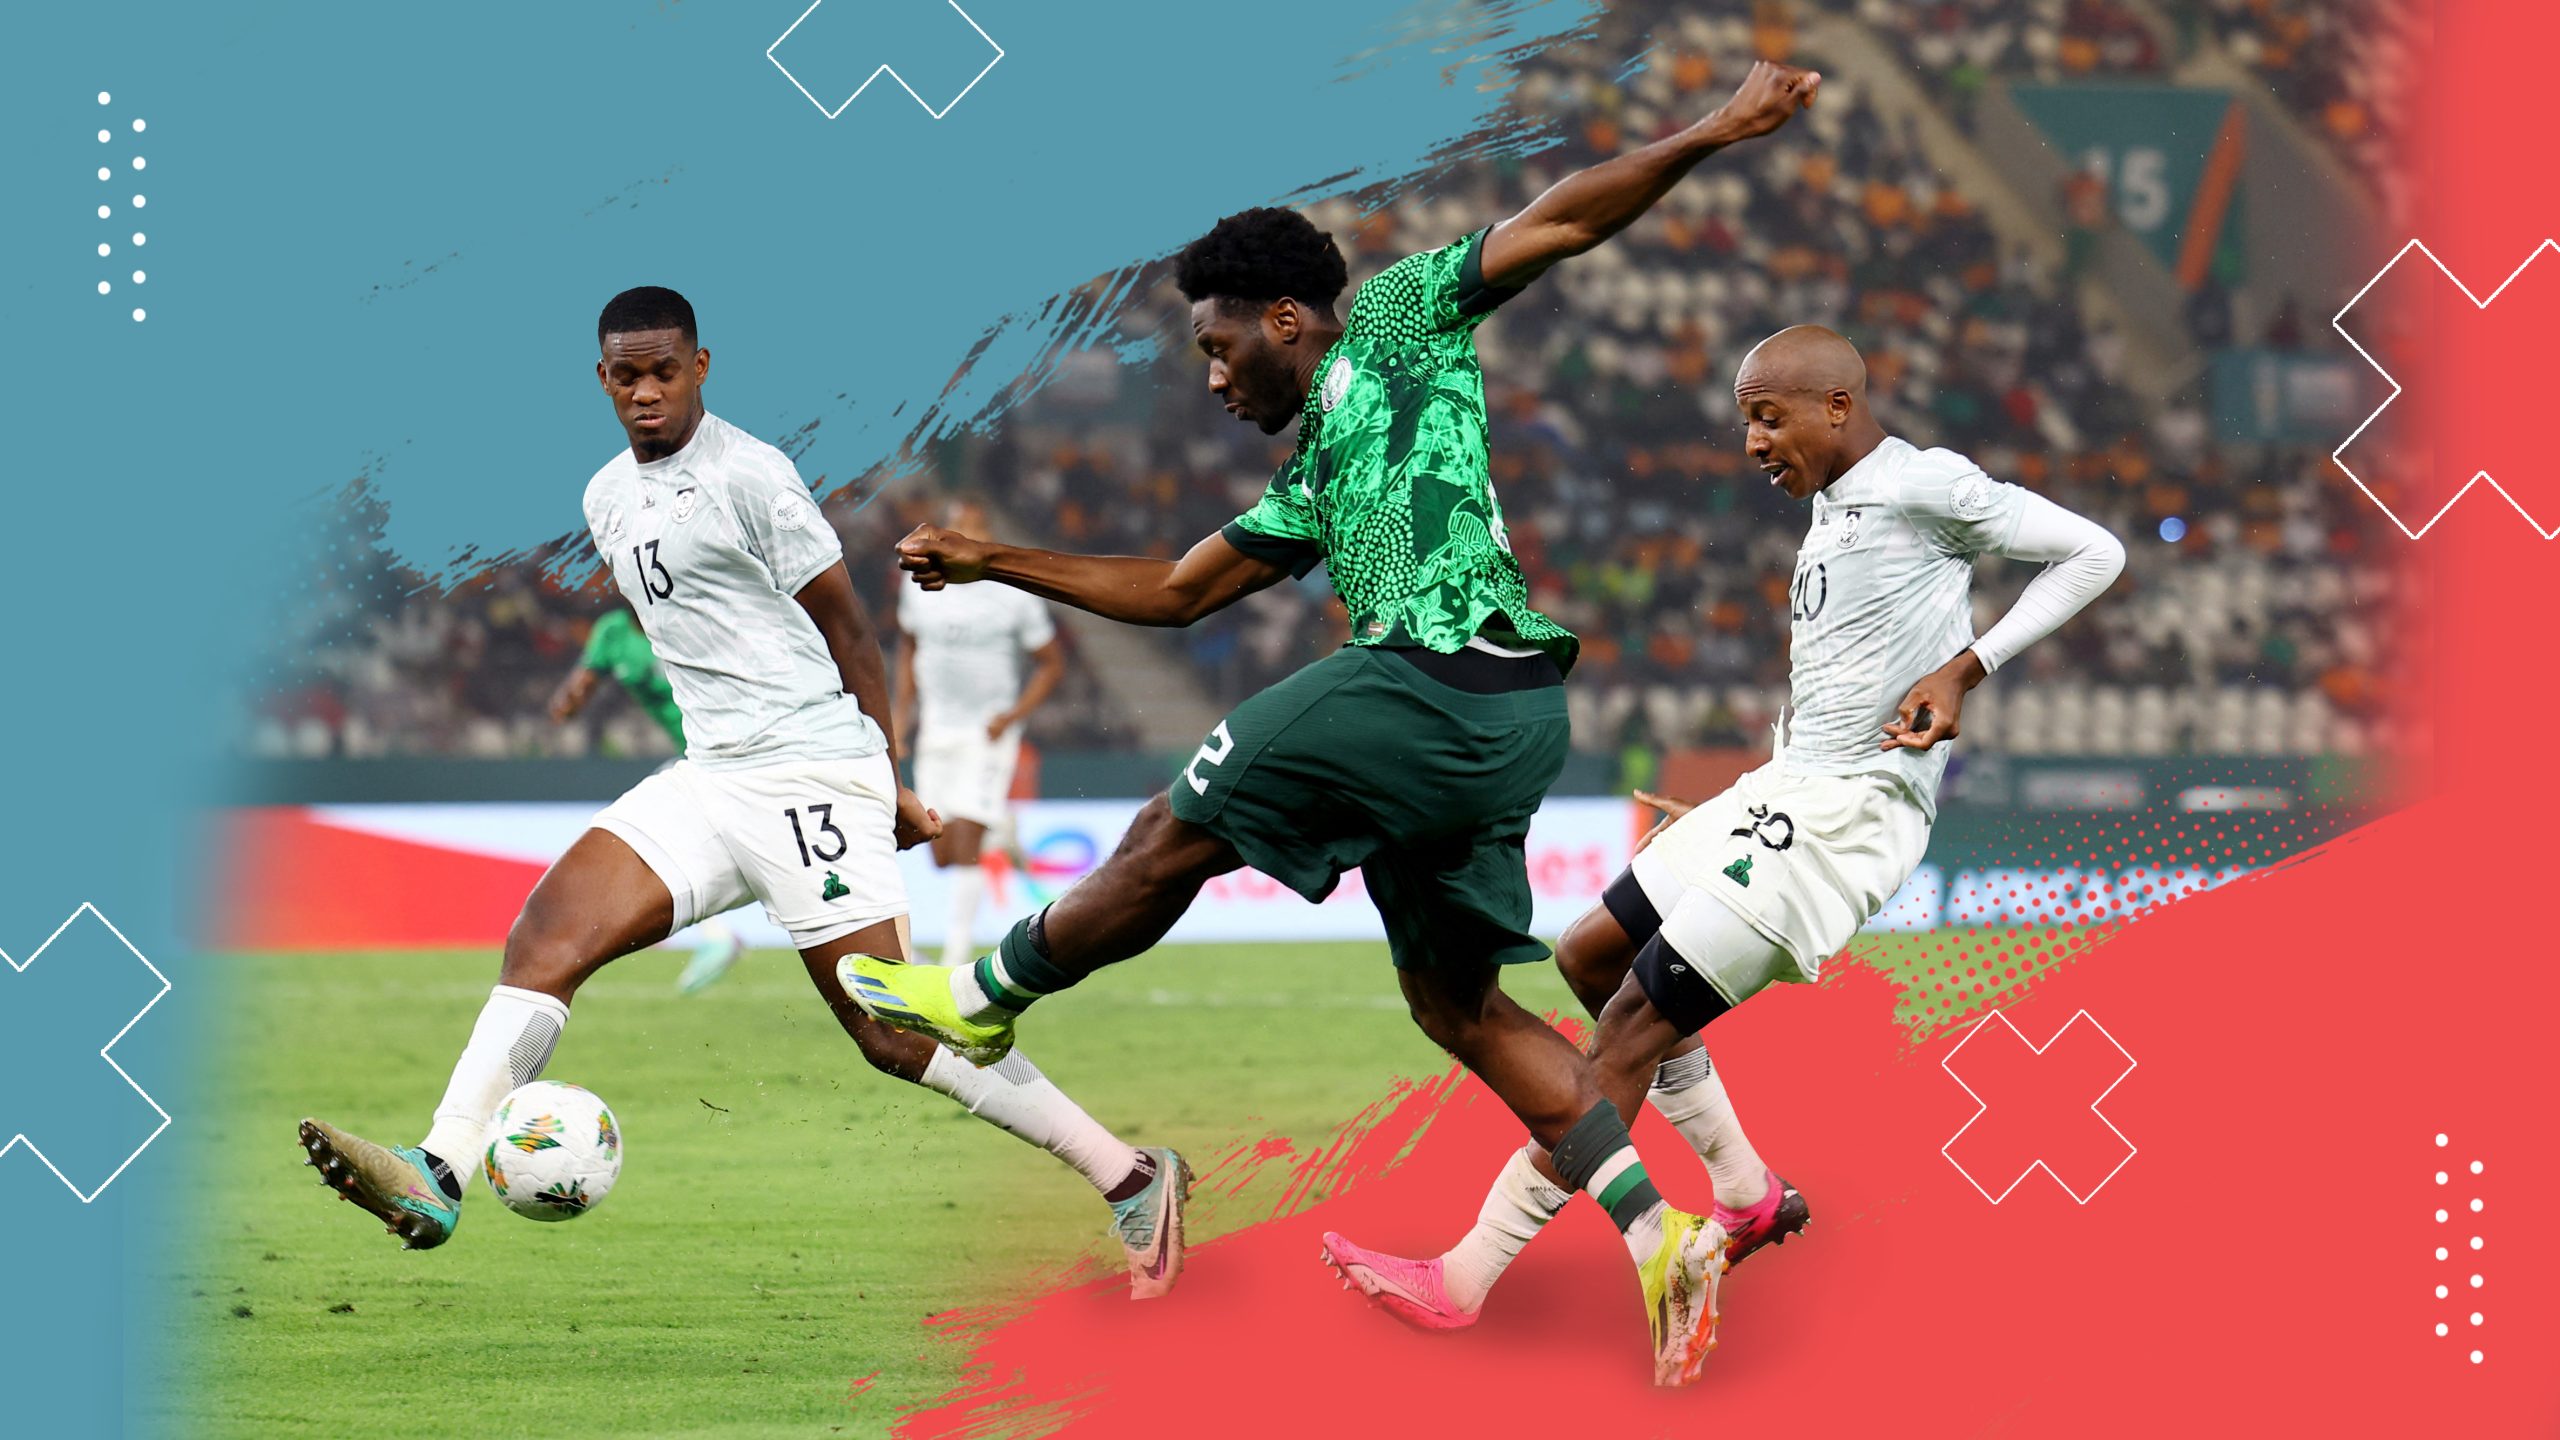 Nigeria’s national team performance